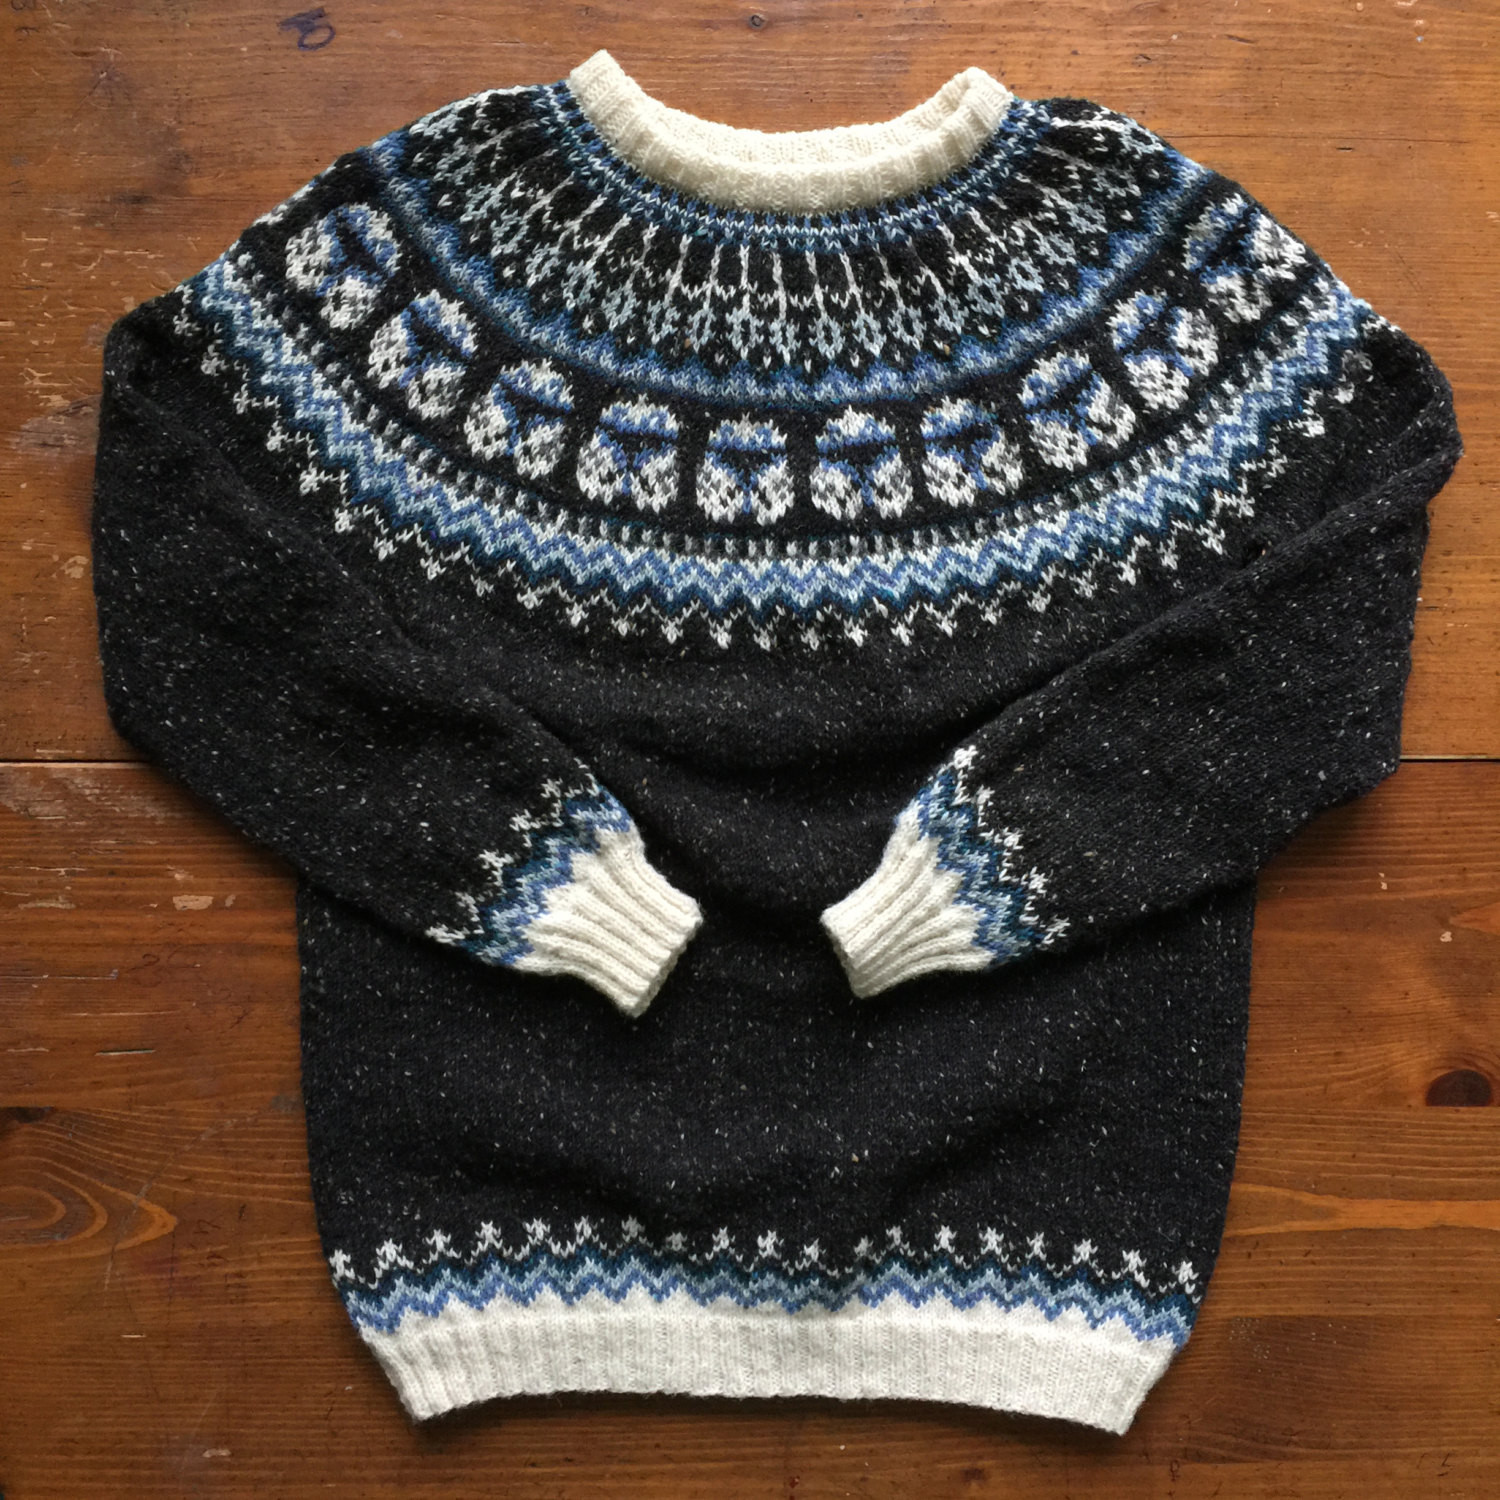 Star Wars sweaters by Natela Datura Design - The Kessel Runway